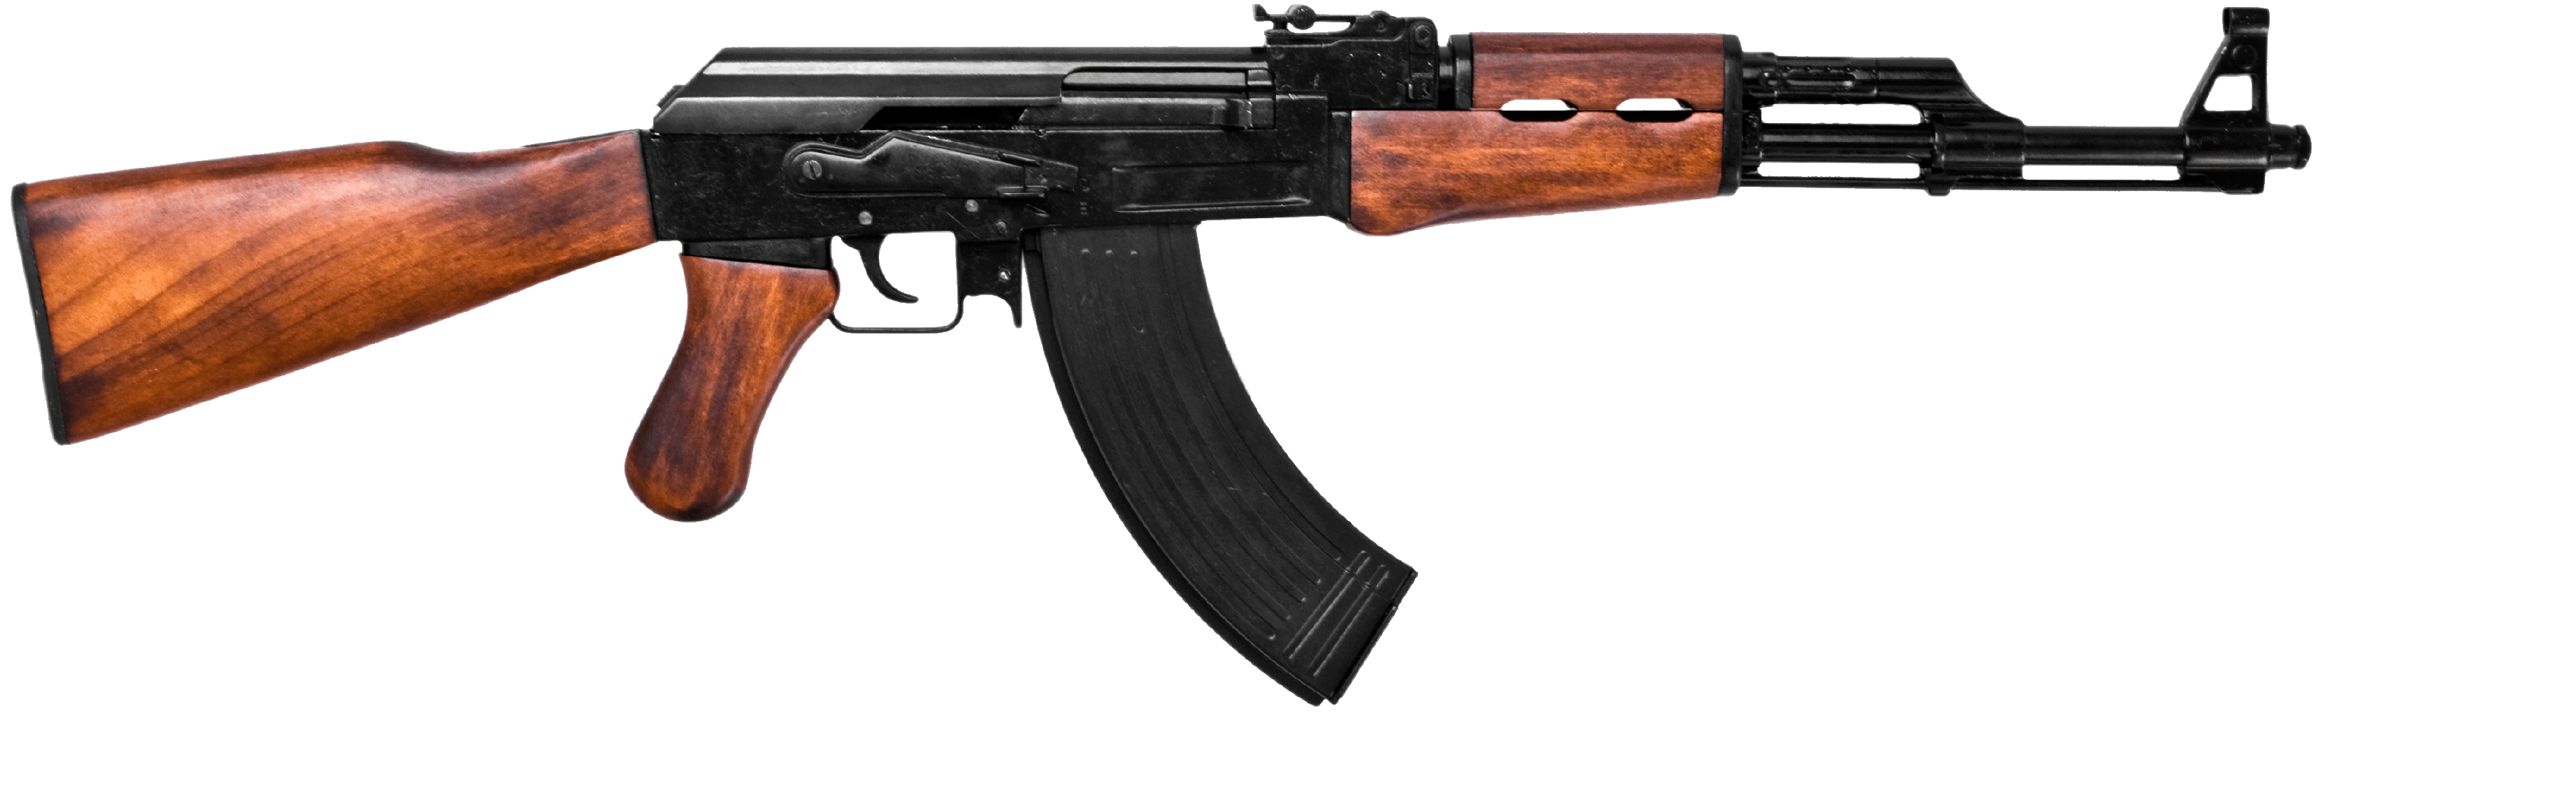 Ak-47 Kalash Russian Assault Rifle Png PNG Image